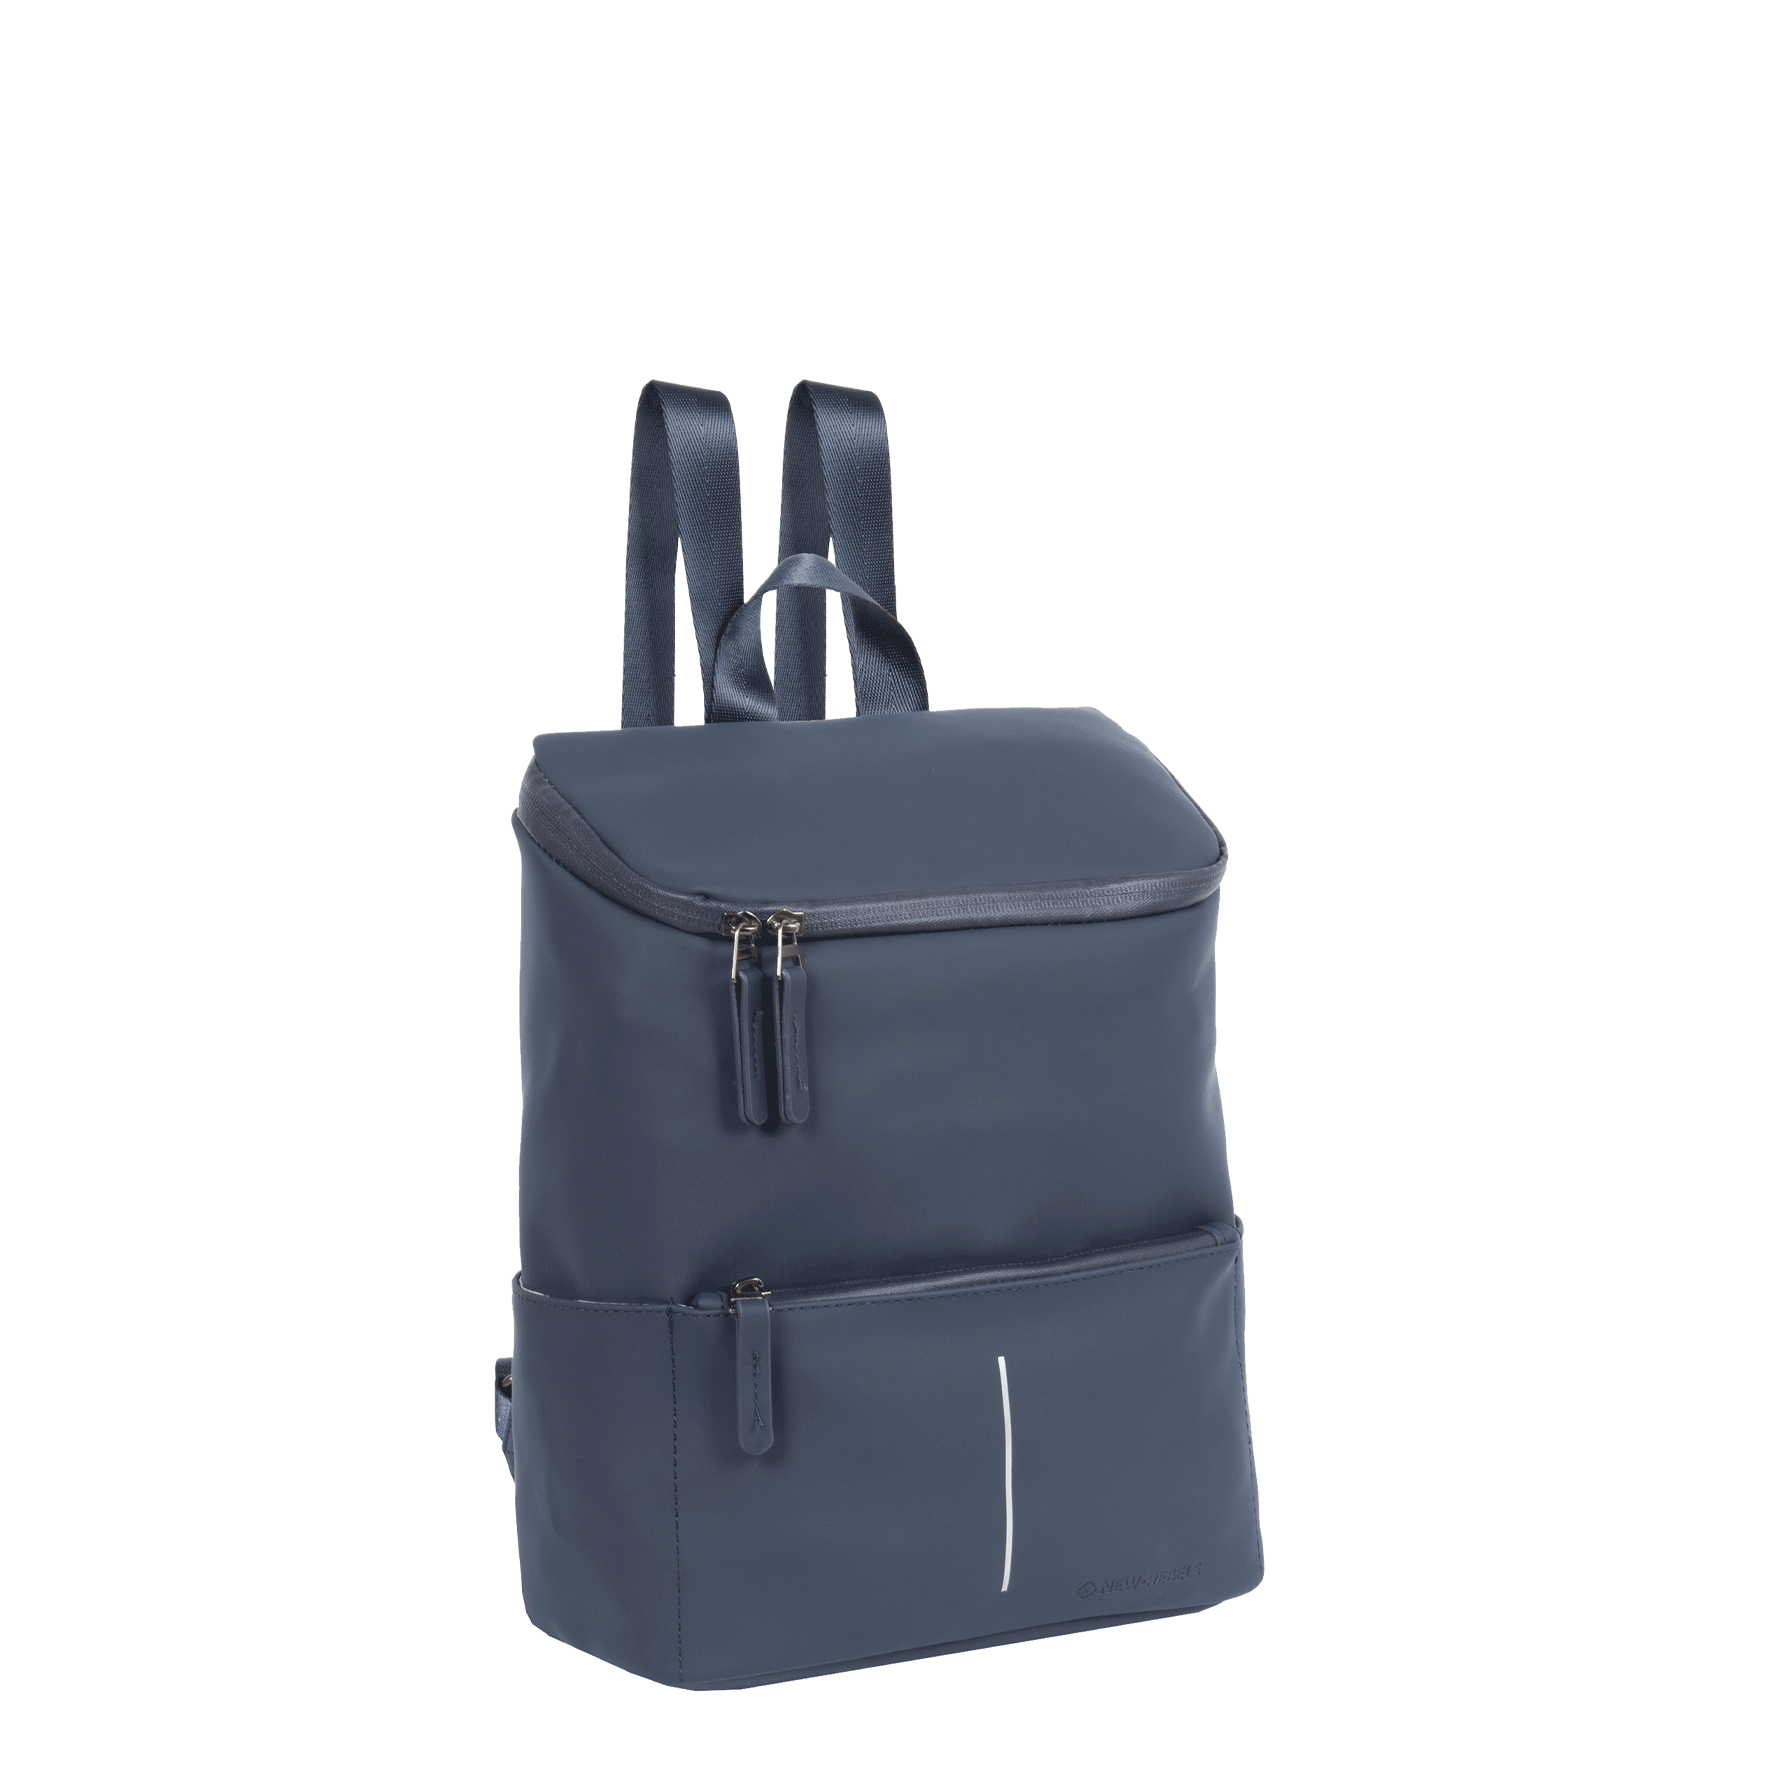 New Rebels® Mart - Rugtas - Blauw - 1087 - 23x14x32cm - Rugzak / Backpack